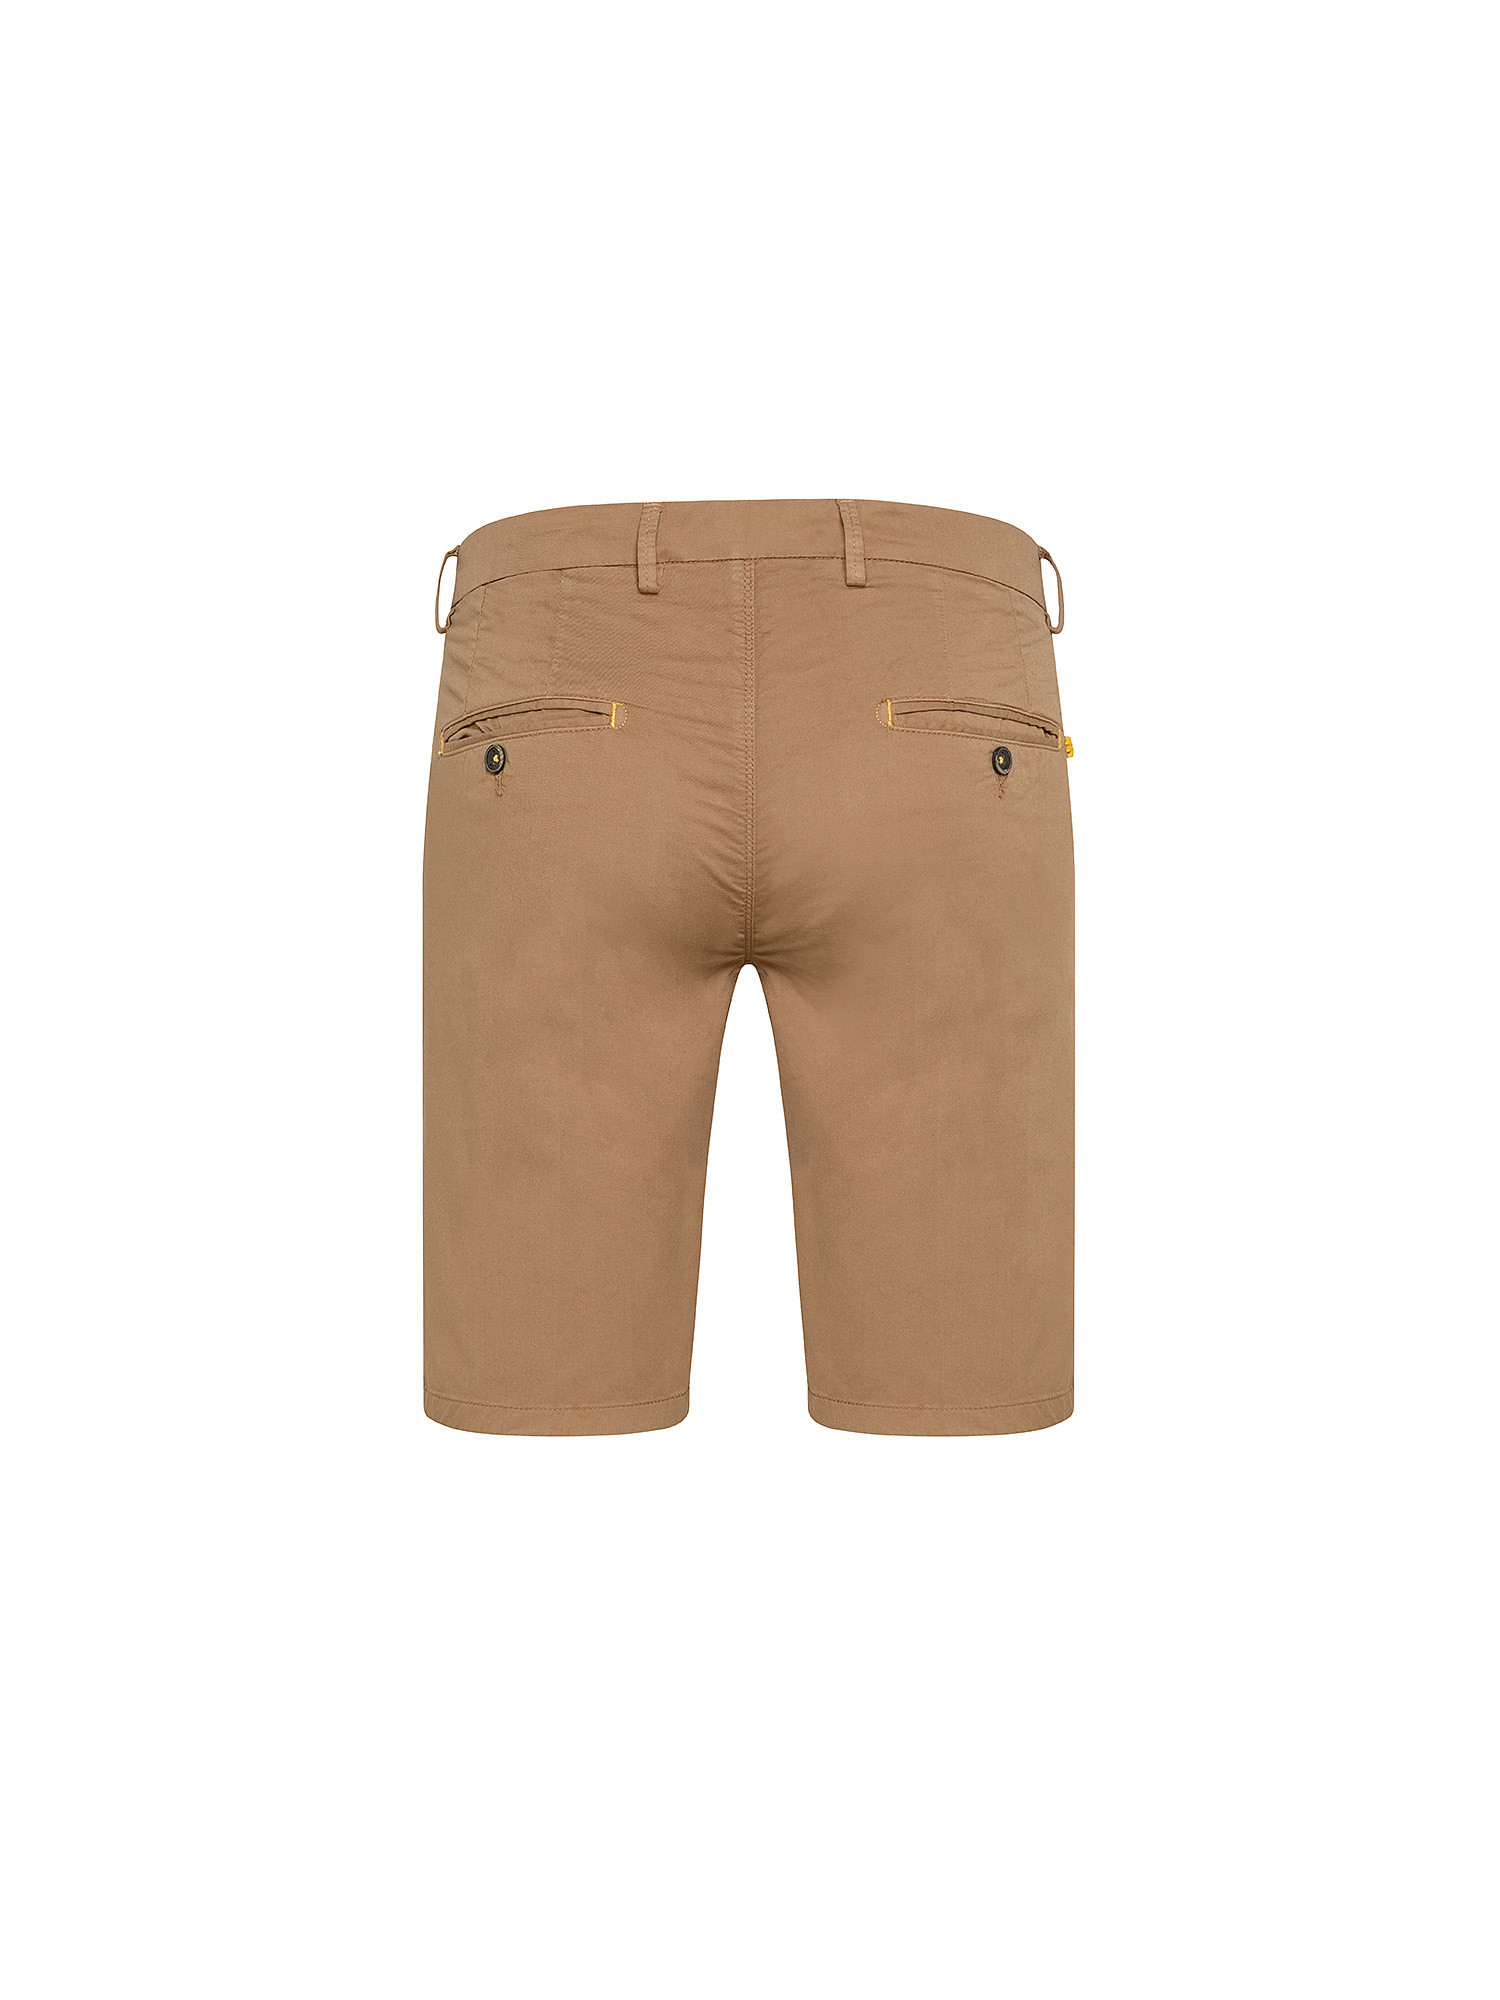 Slim fit dyed cotton bermuda shorts, Light Brown, large image number 1